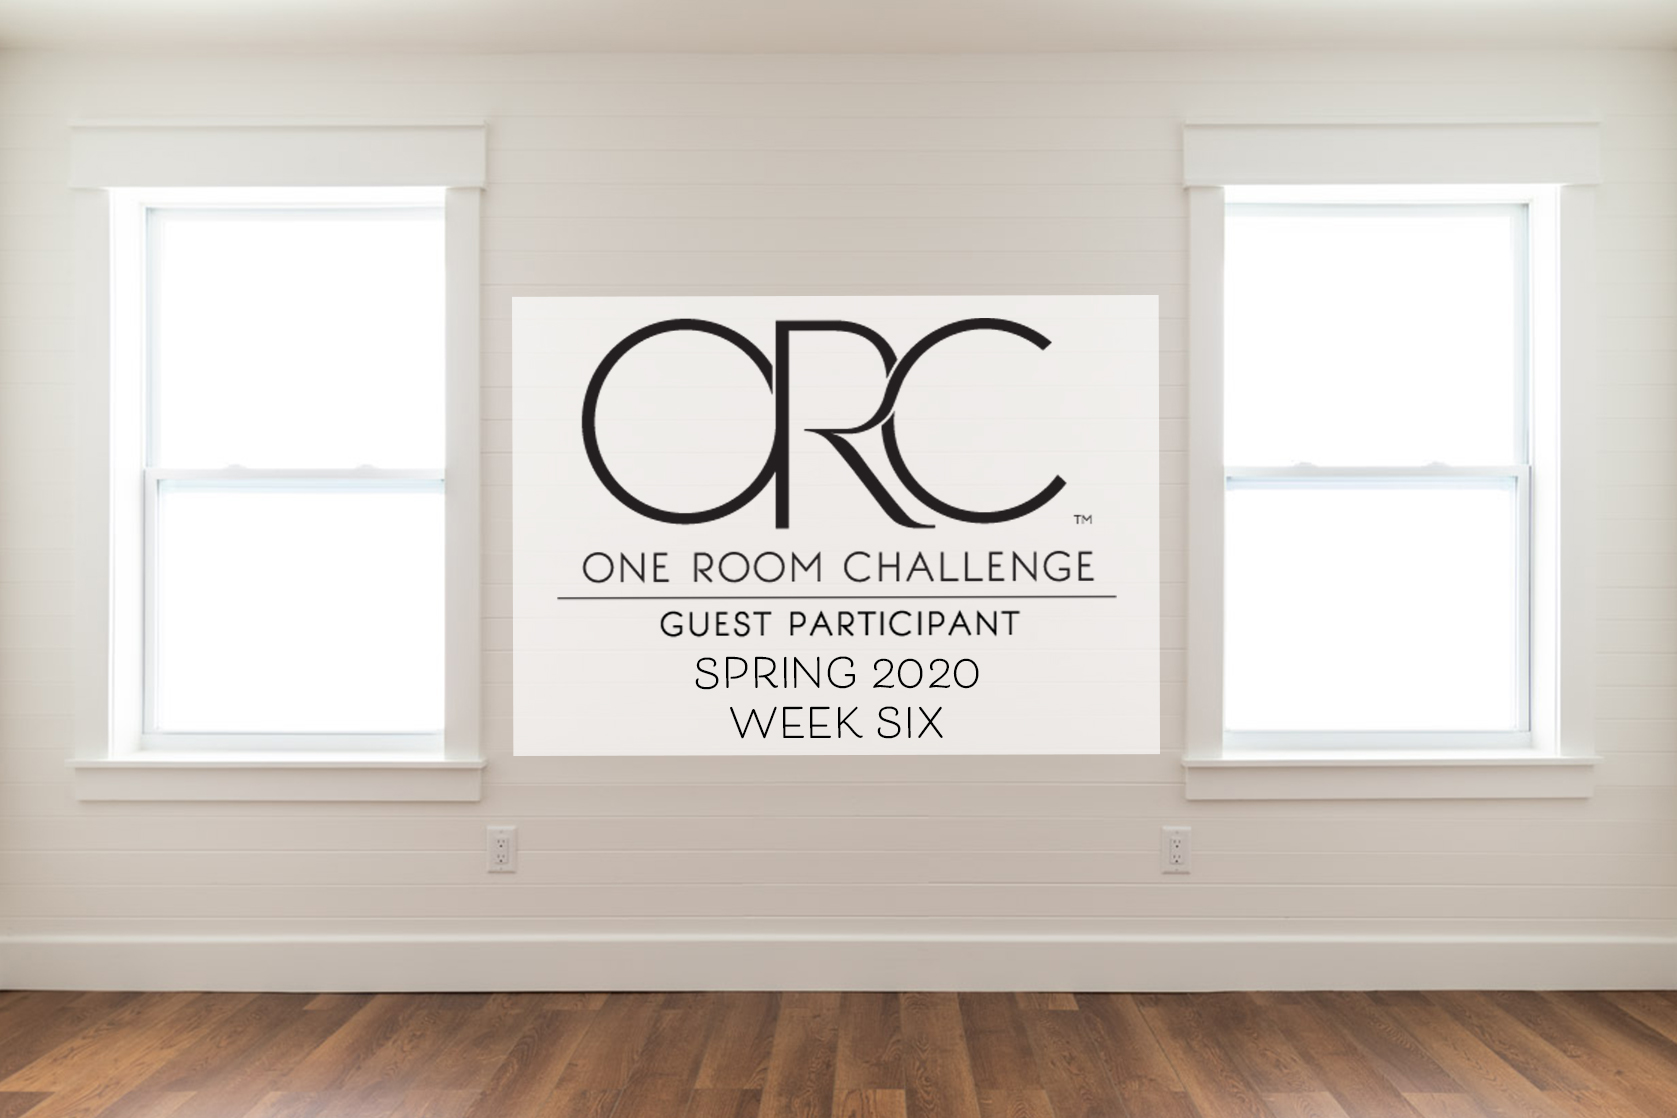 One Room Challenge Week 6